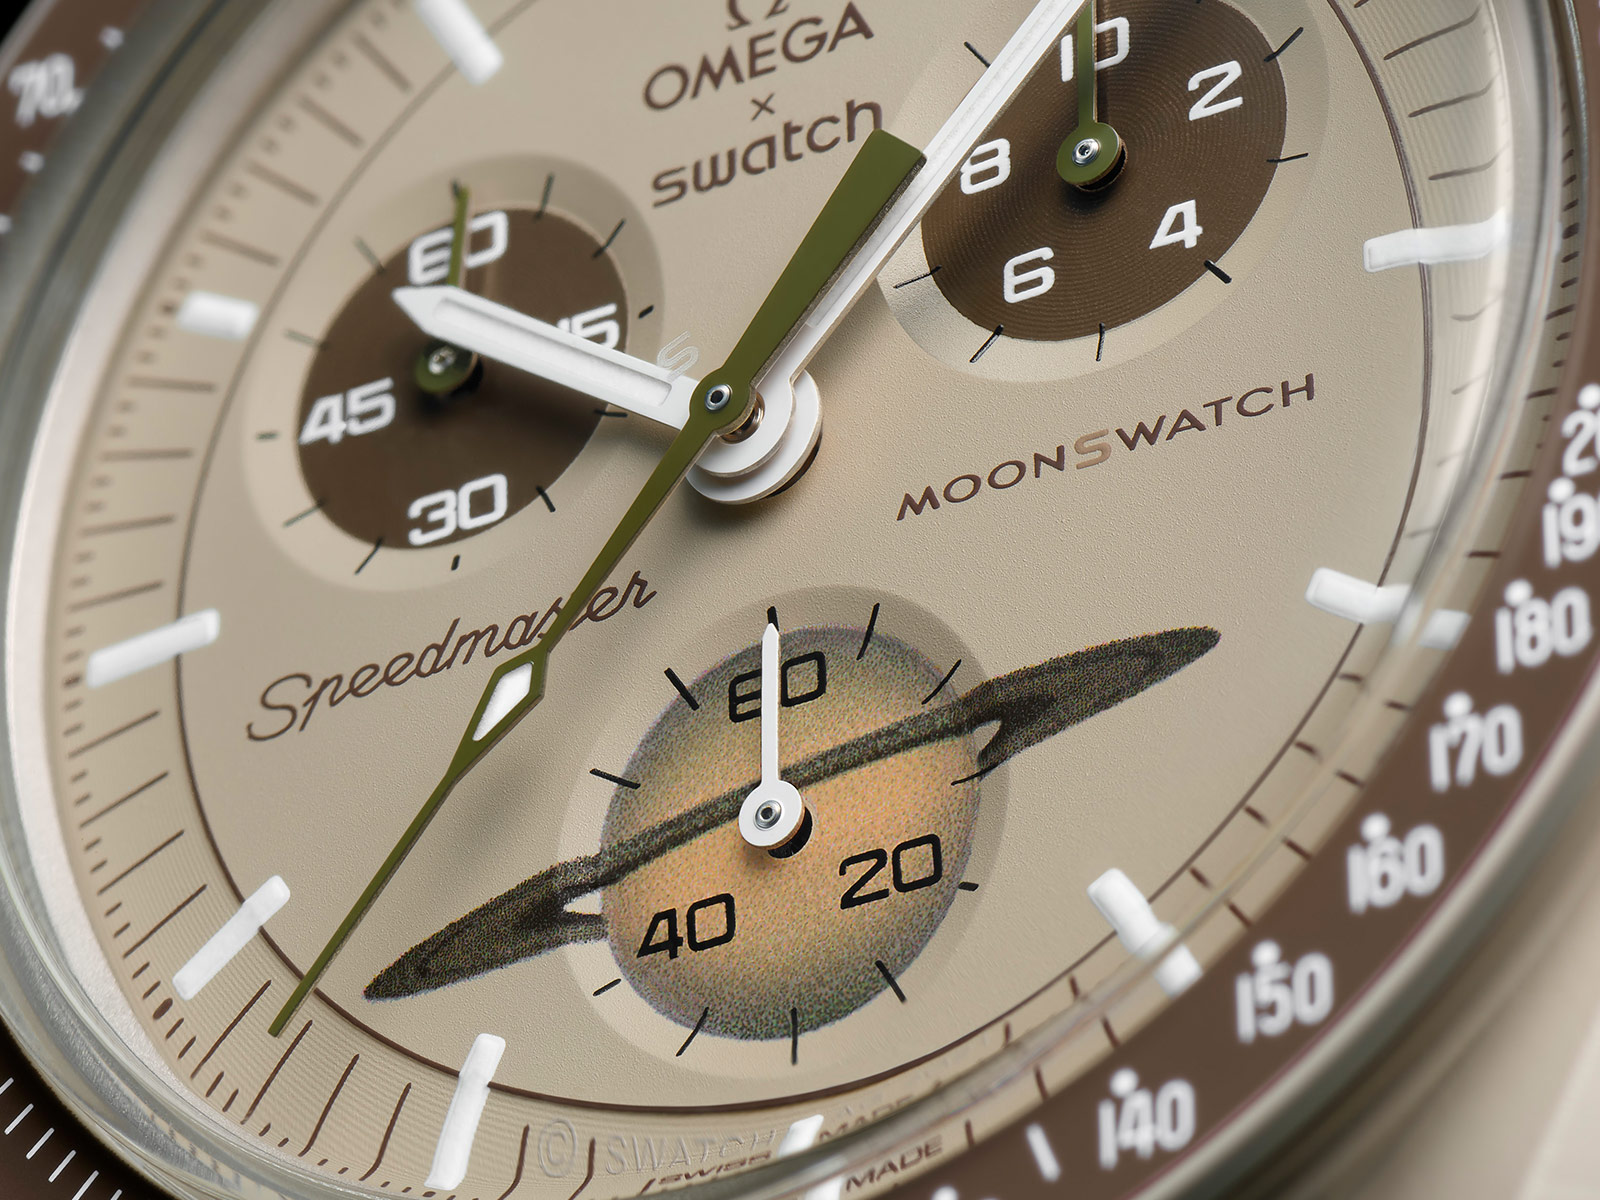 Omega-X-Swatch-Moon-Swatch-Speedmaster-Chronographs-10.jpg